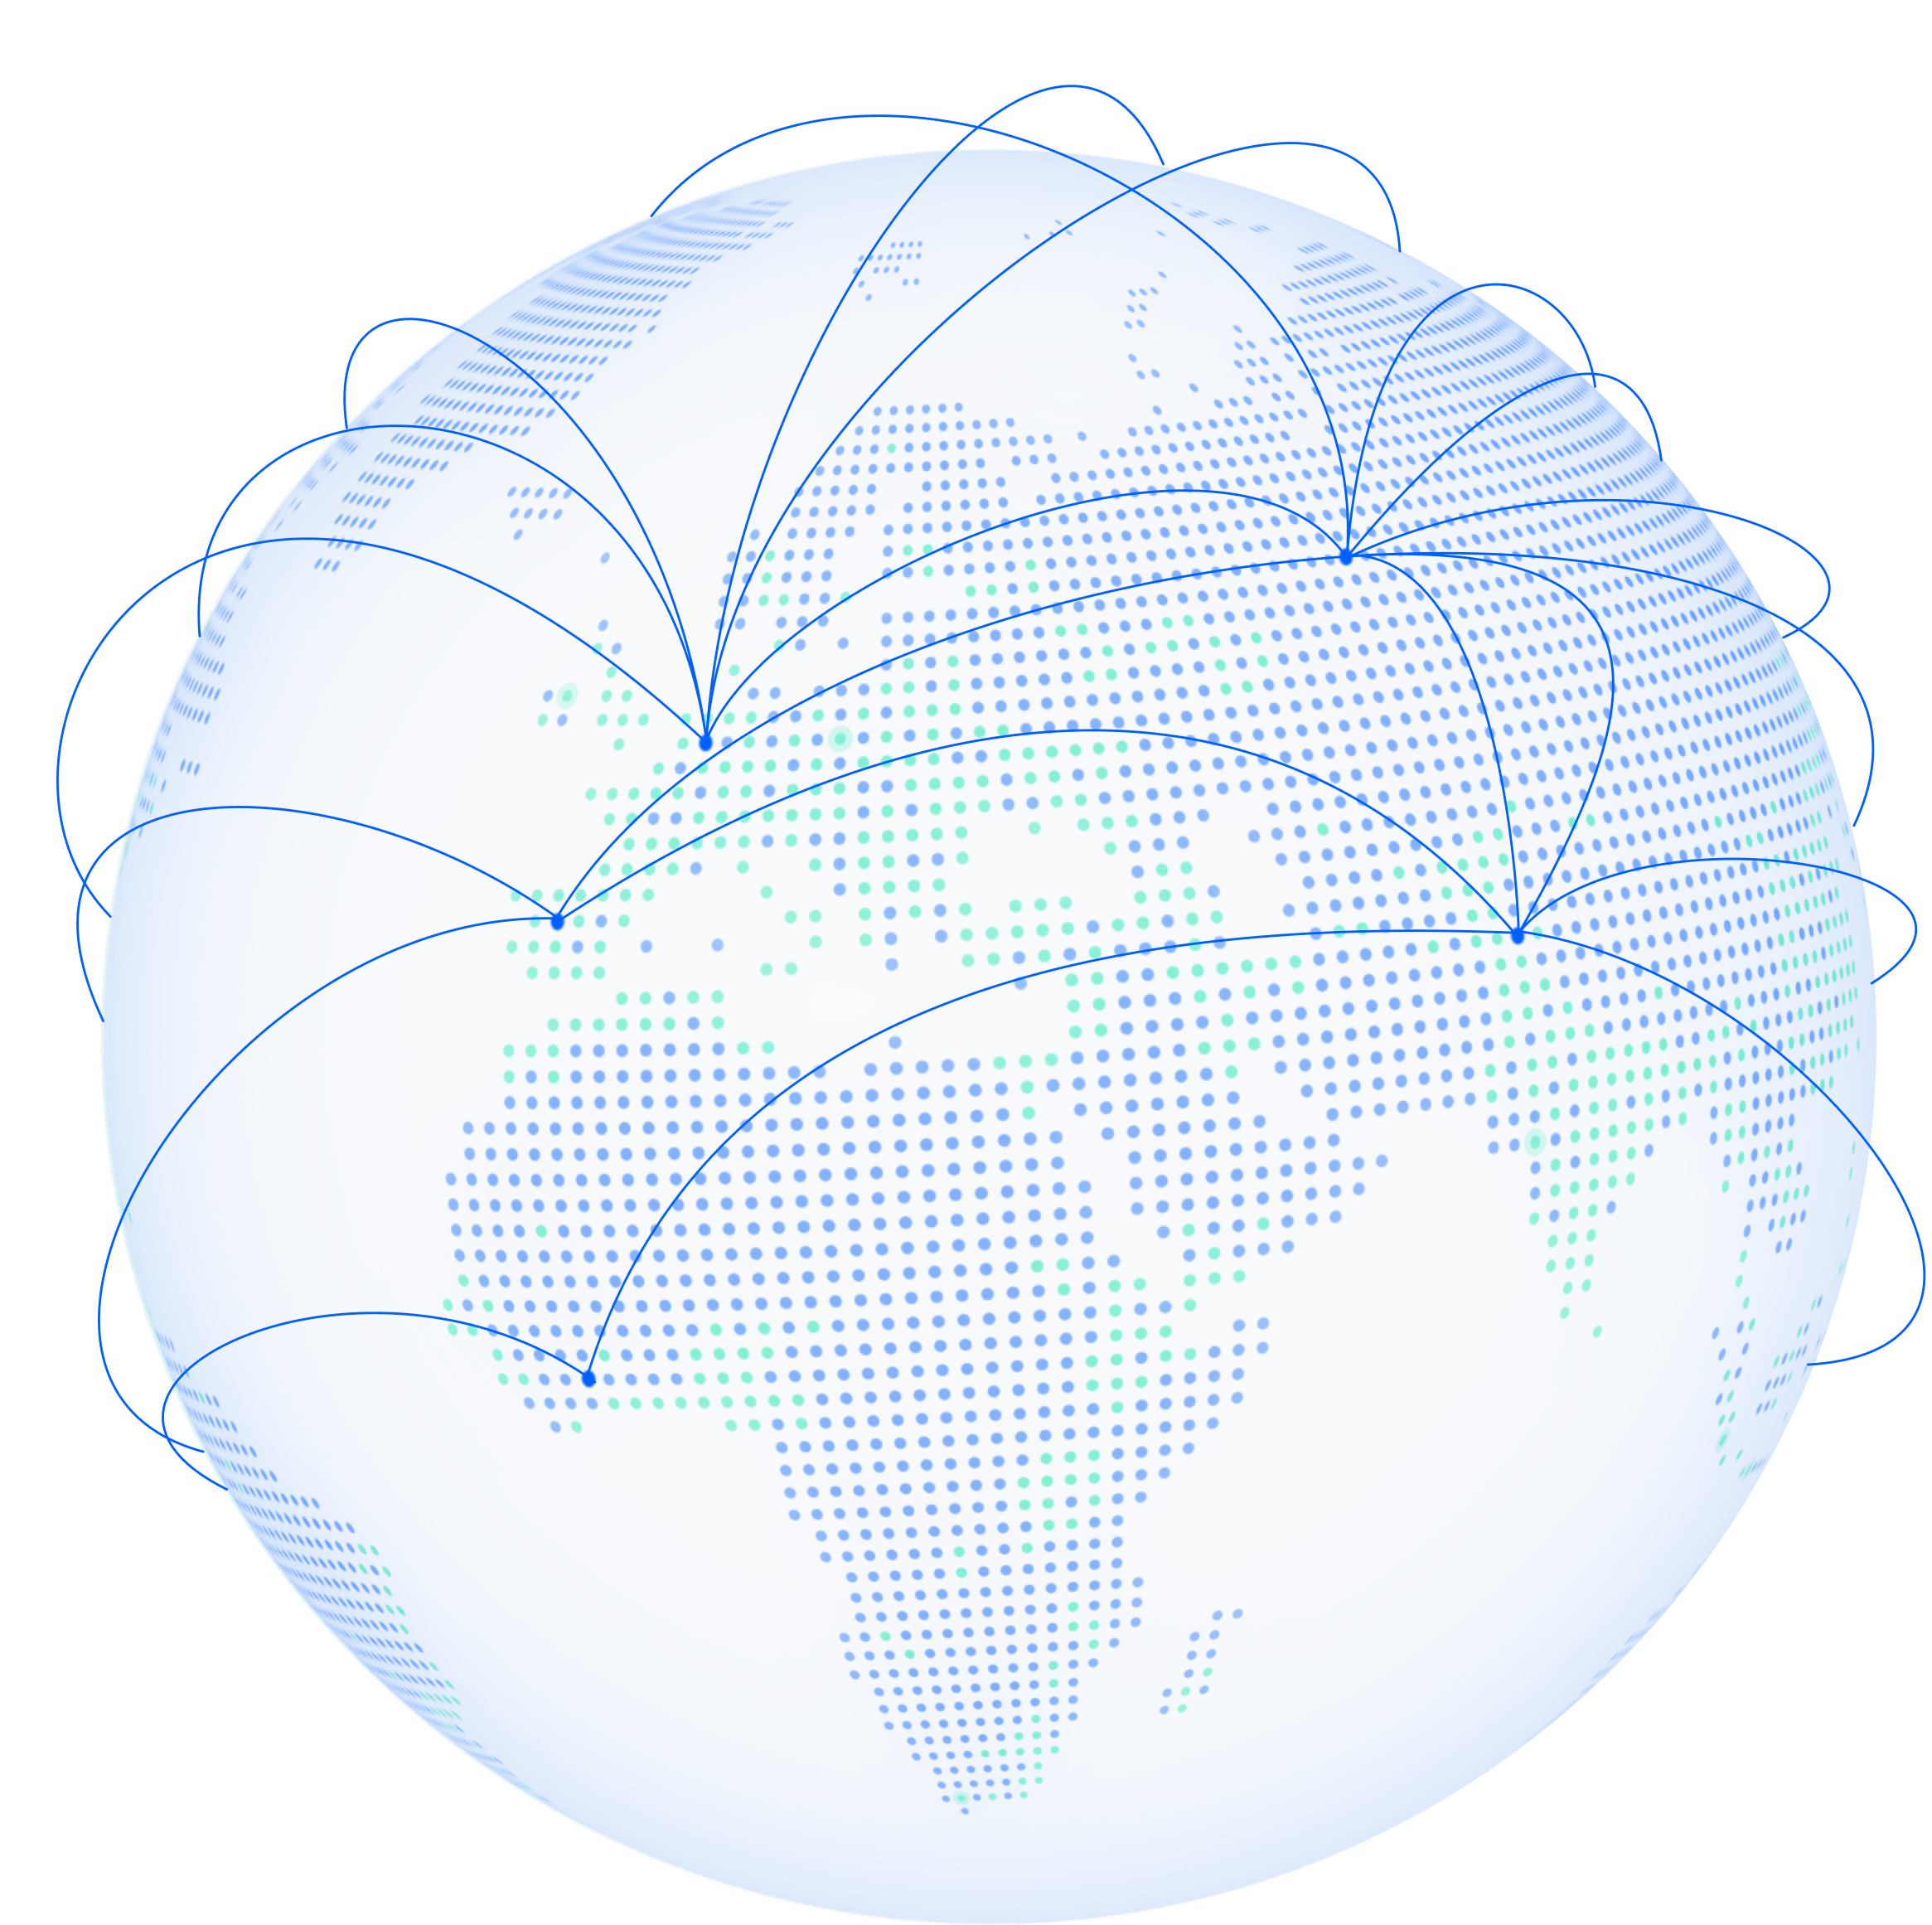 example of global edge network